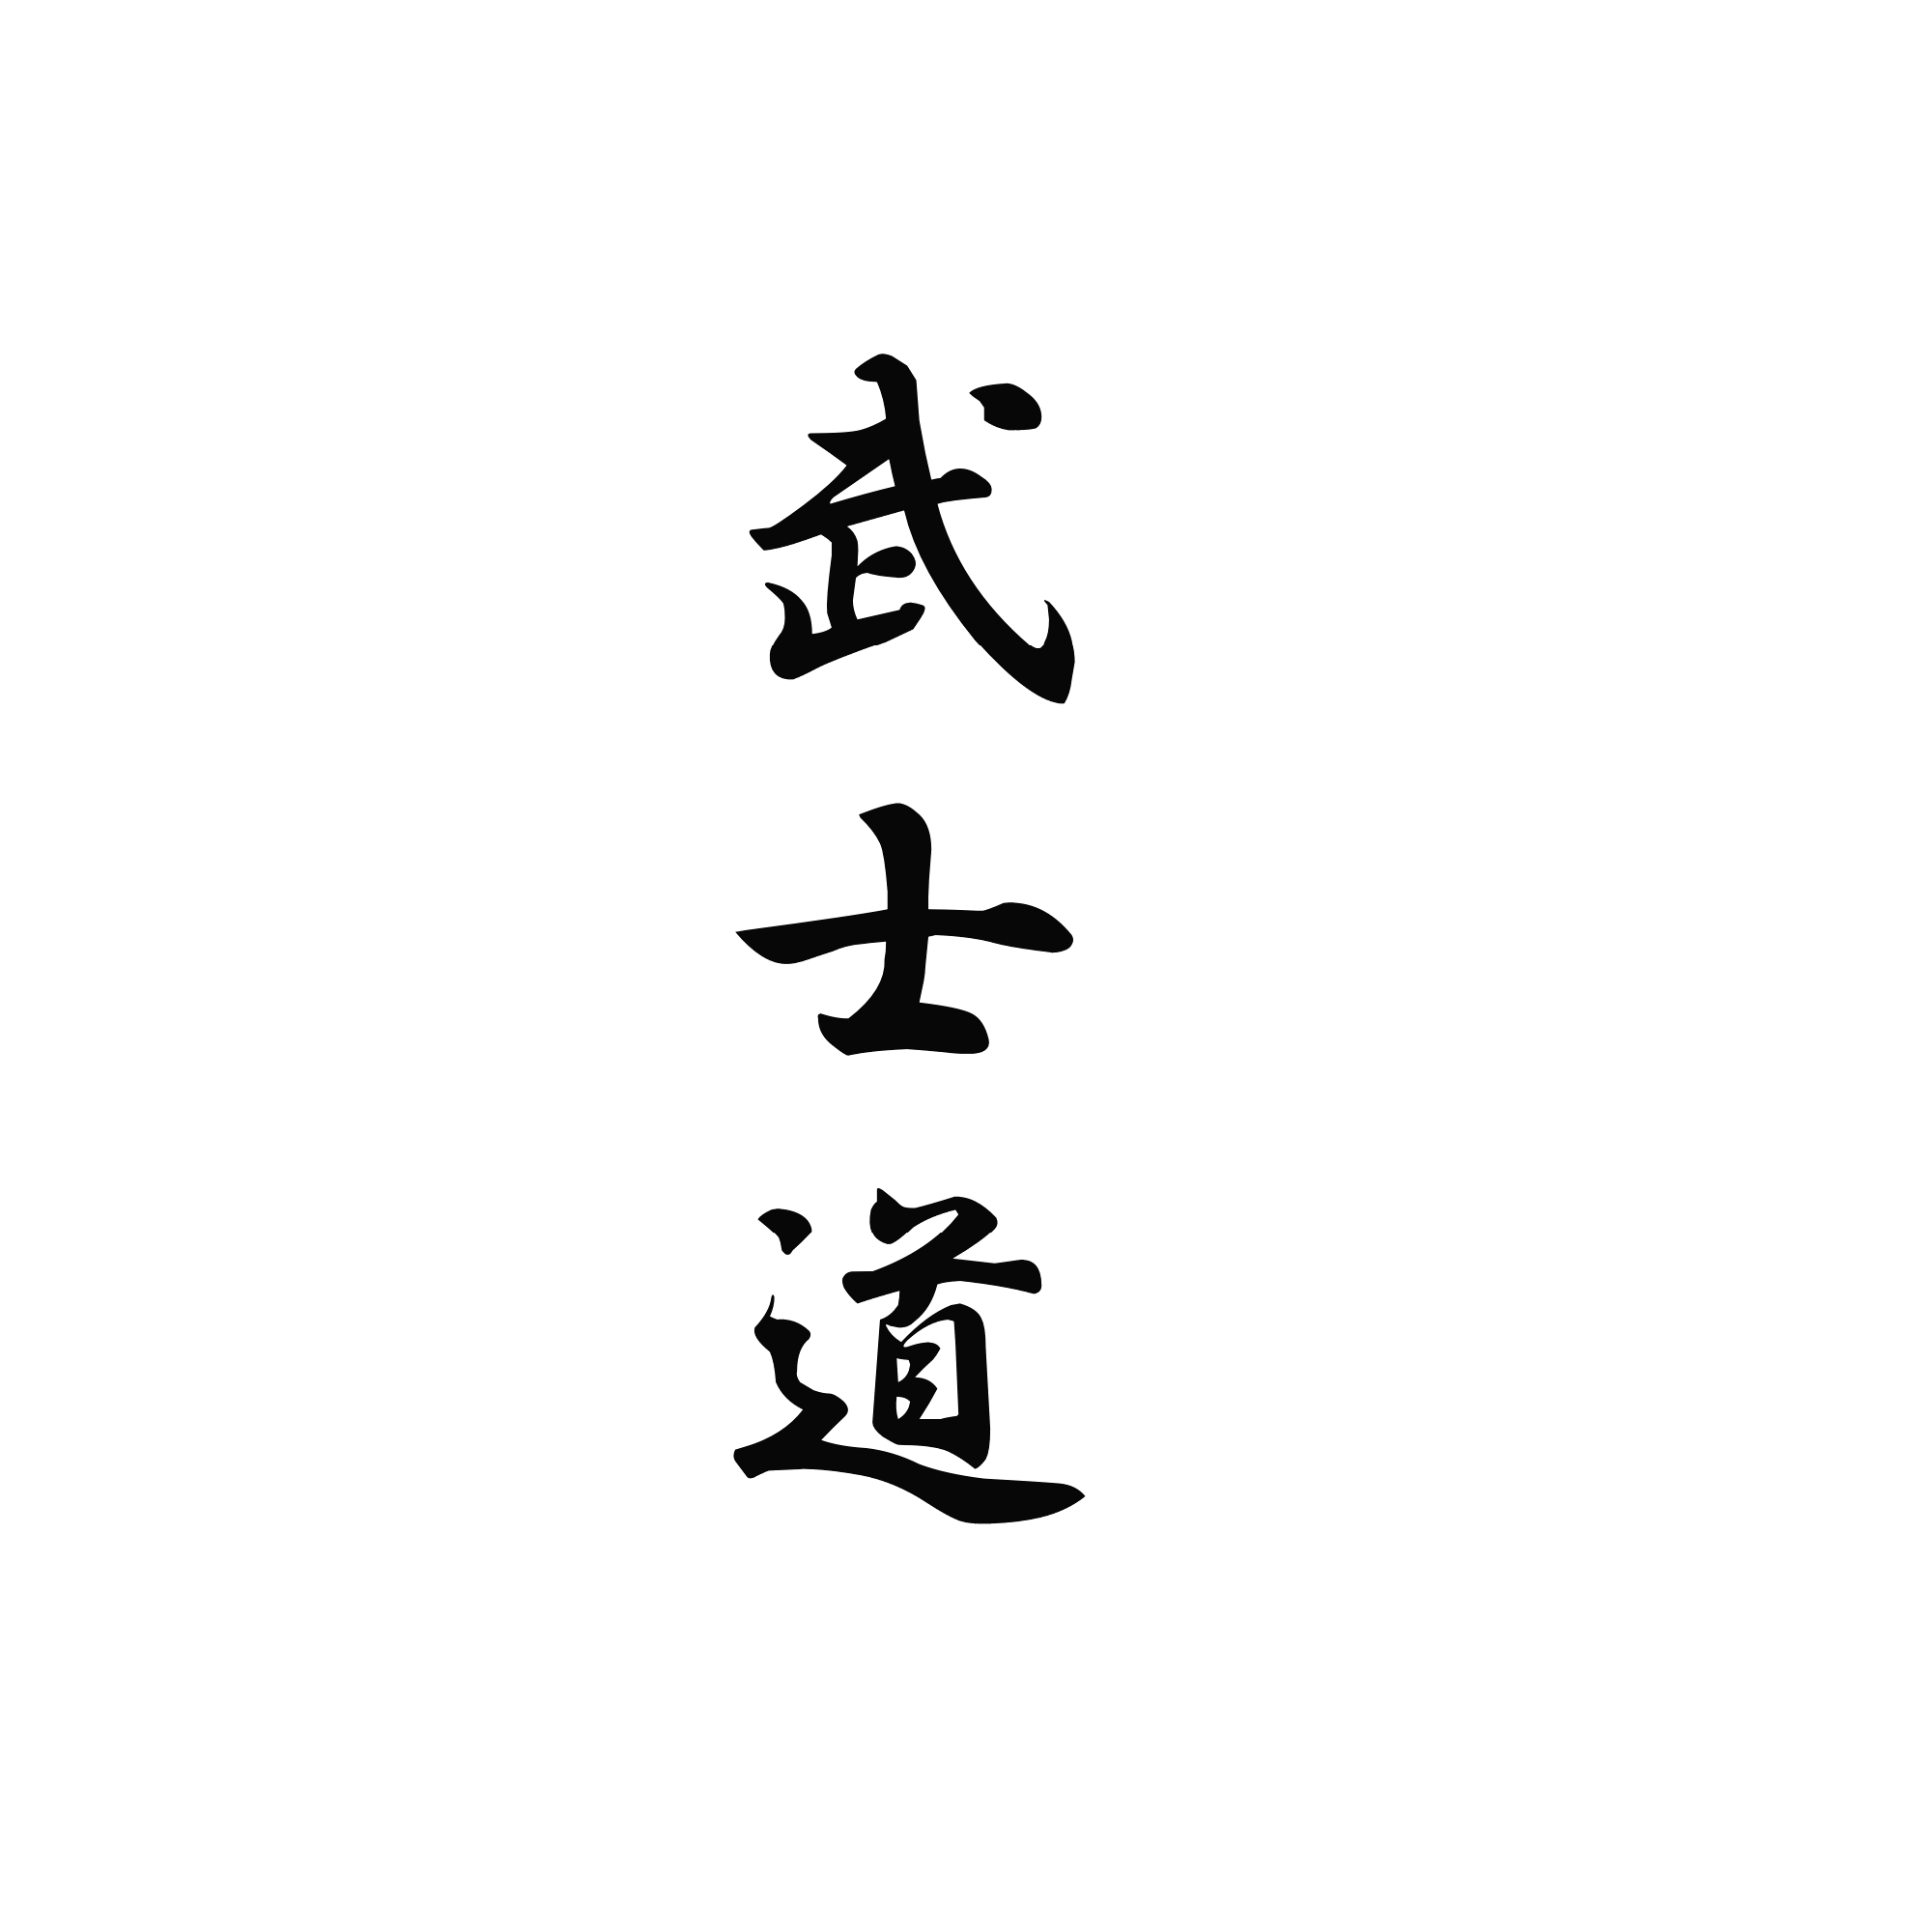 kanji for death